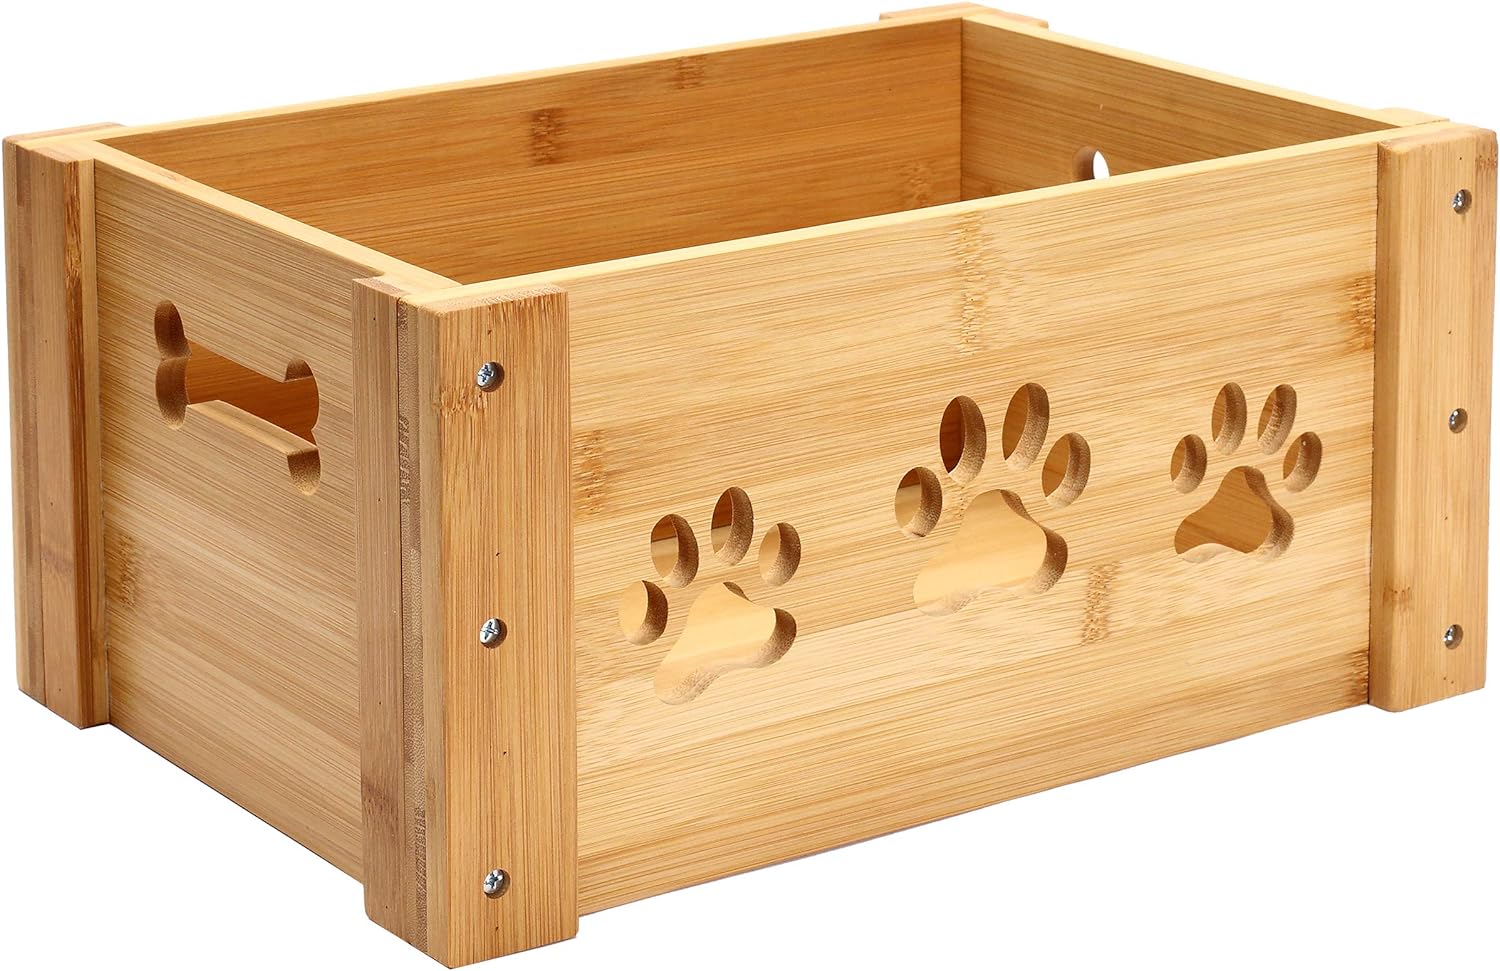 Babepet Wooden Dog Toy Box